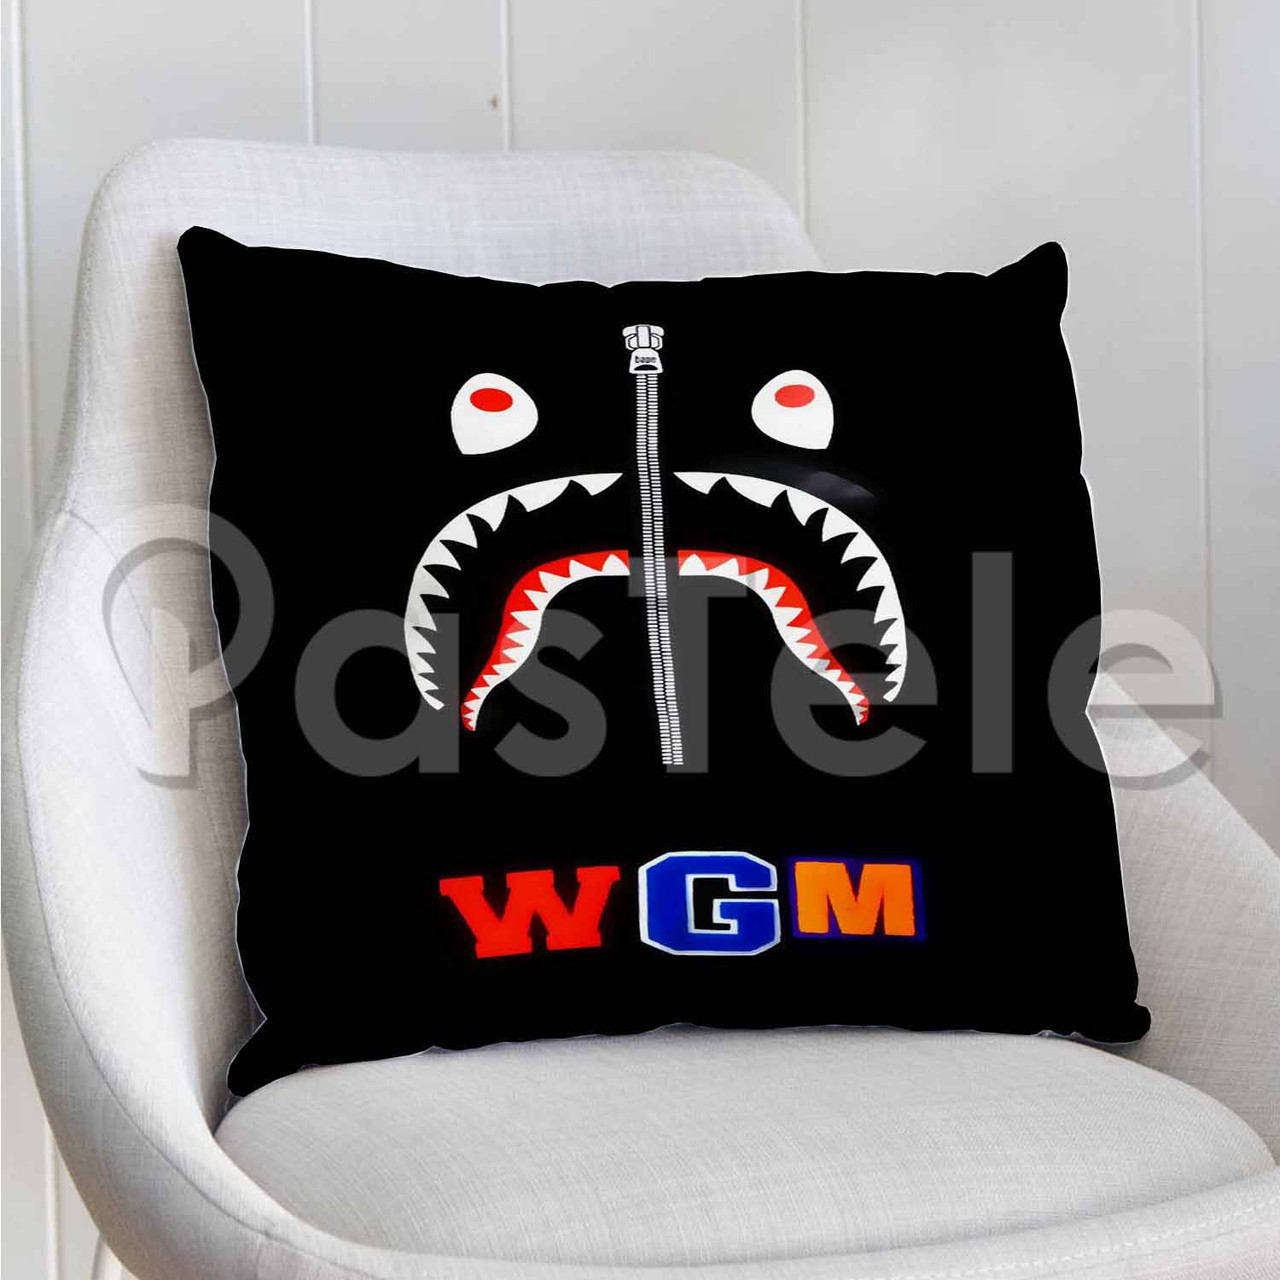 https://cdn11.bigcommerce.com/s-xhmrmcecz5/images/stencil/1280x1280/products/25710/26902/Black-Bape-Camo-Shark-WGM-Custom-Pillow-Decorative-Cushion-Cover__70973.1604724048.jpg?c=1